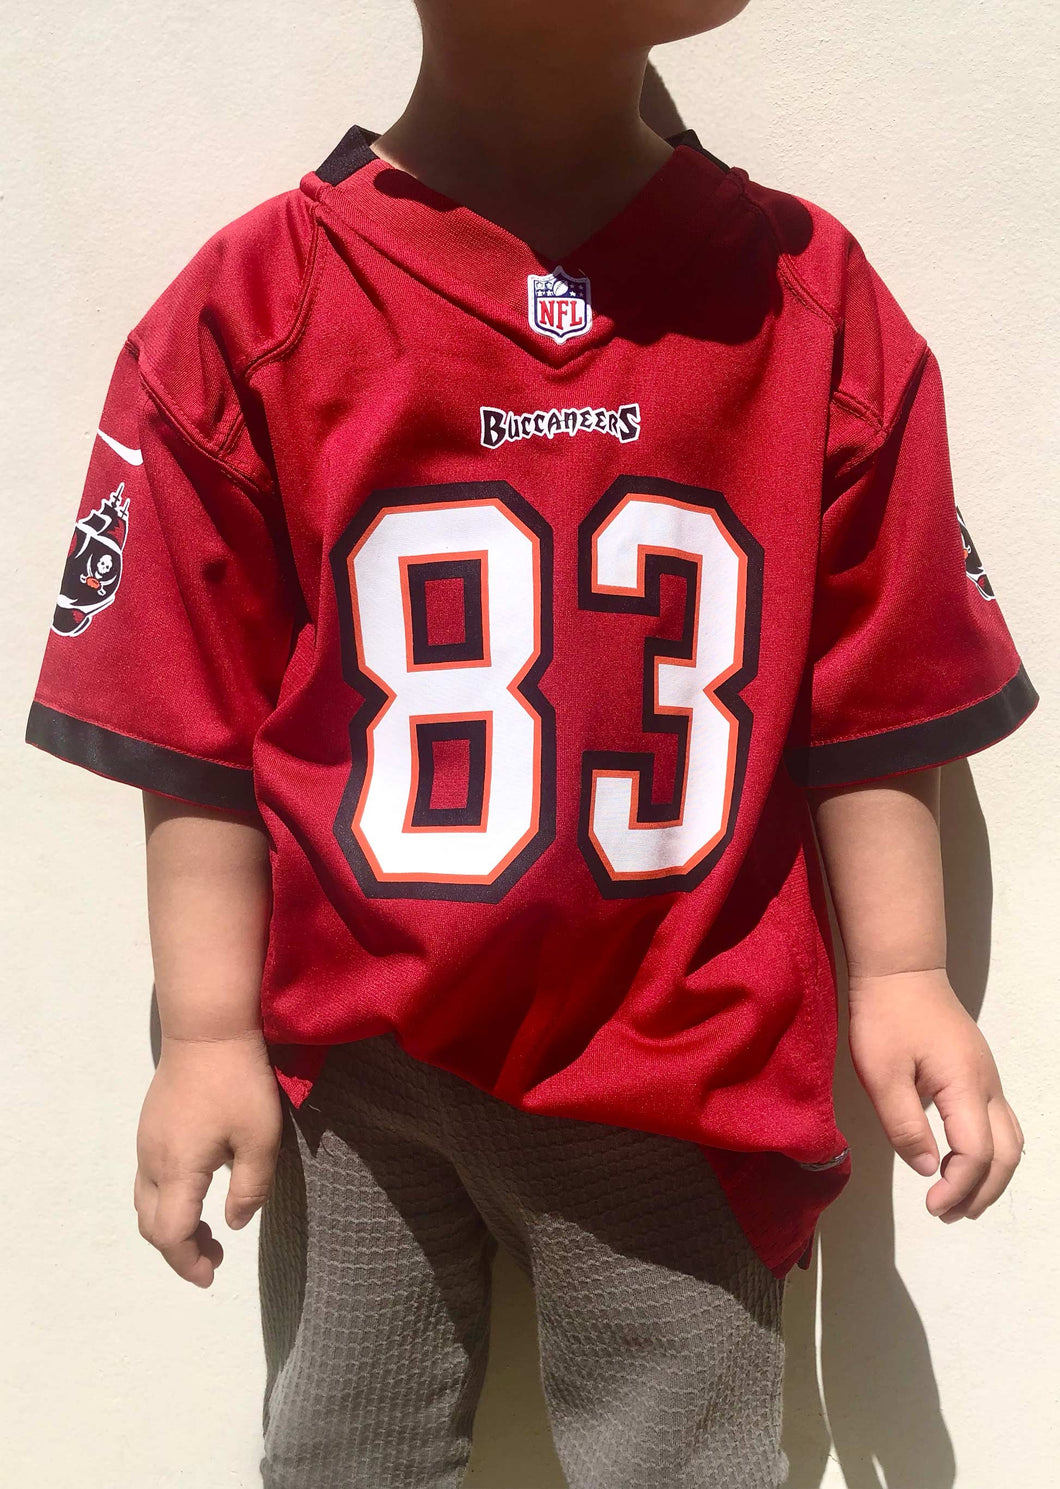 NFL Tampa Bay Buccaneers Vincent Jackson 83 Kids Jersey Red - M